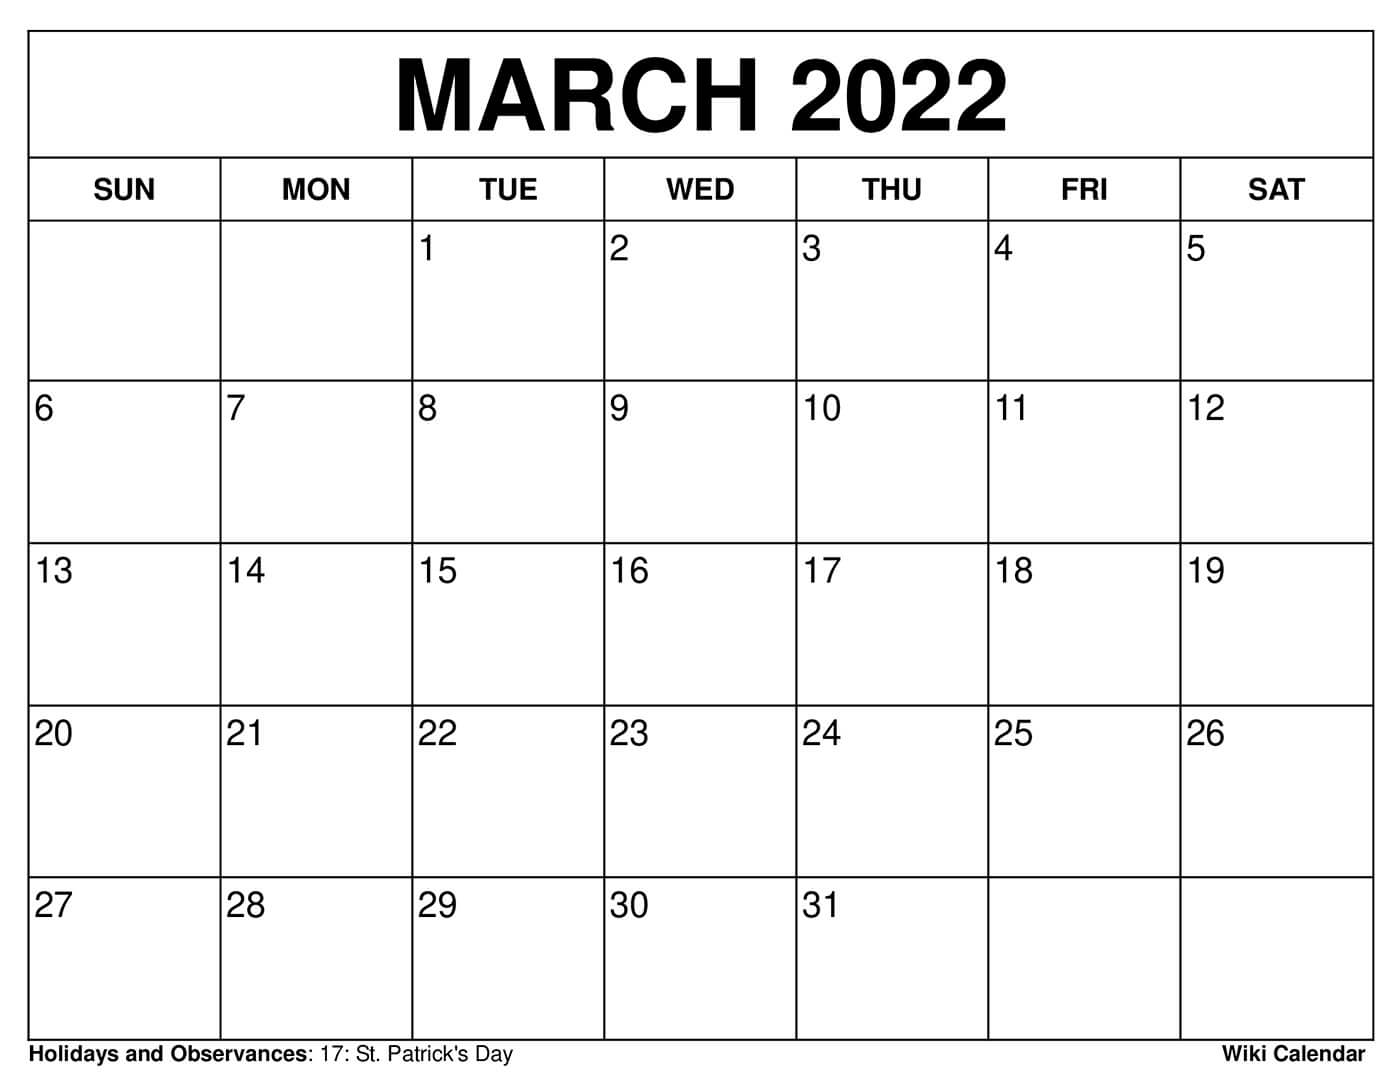 Mar 2022 Calendar Printable Free Printable March 2022 Calendars - Wiki Calendar